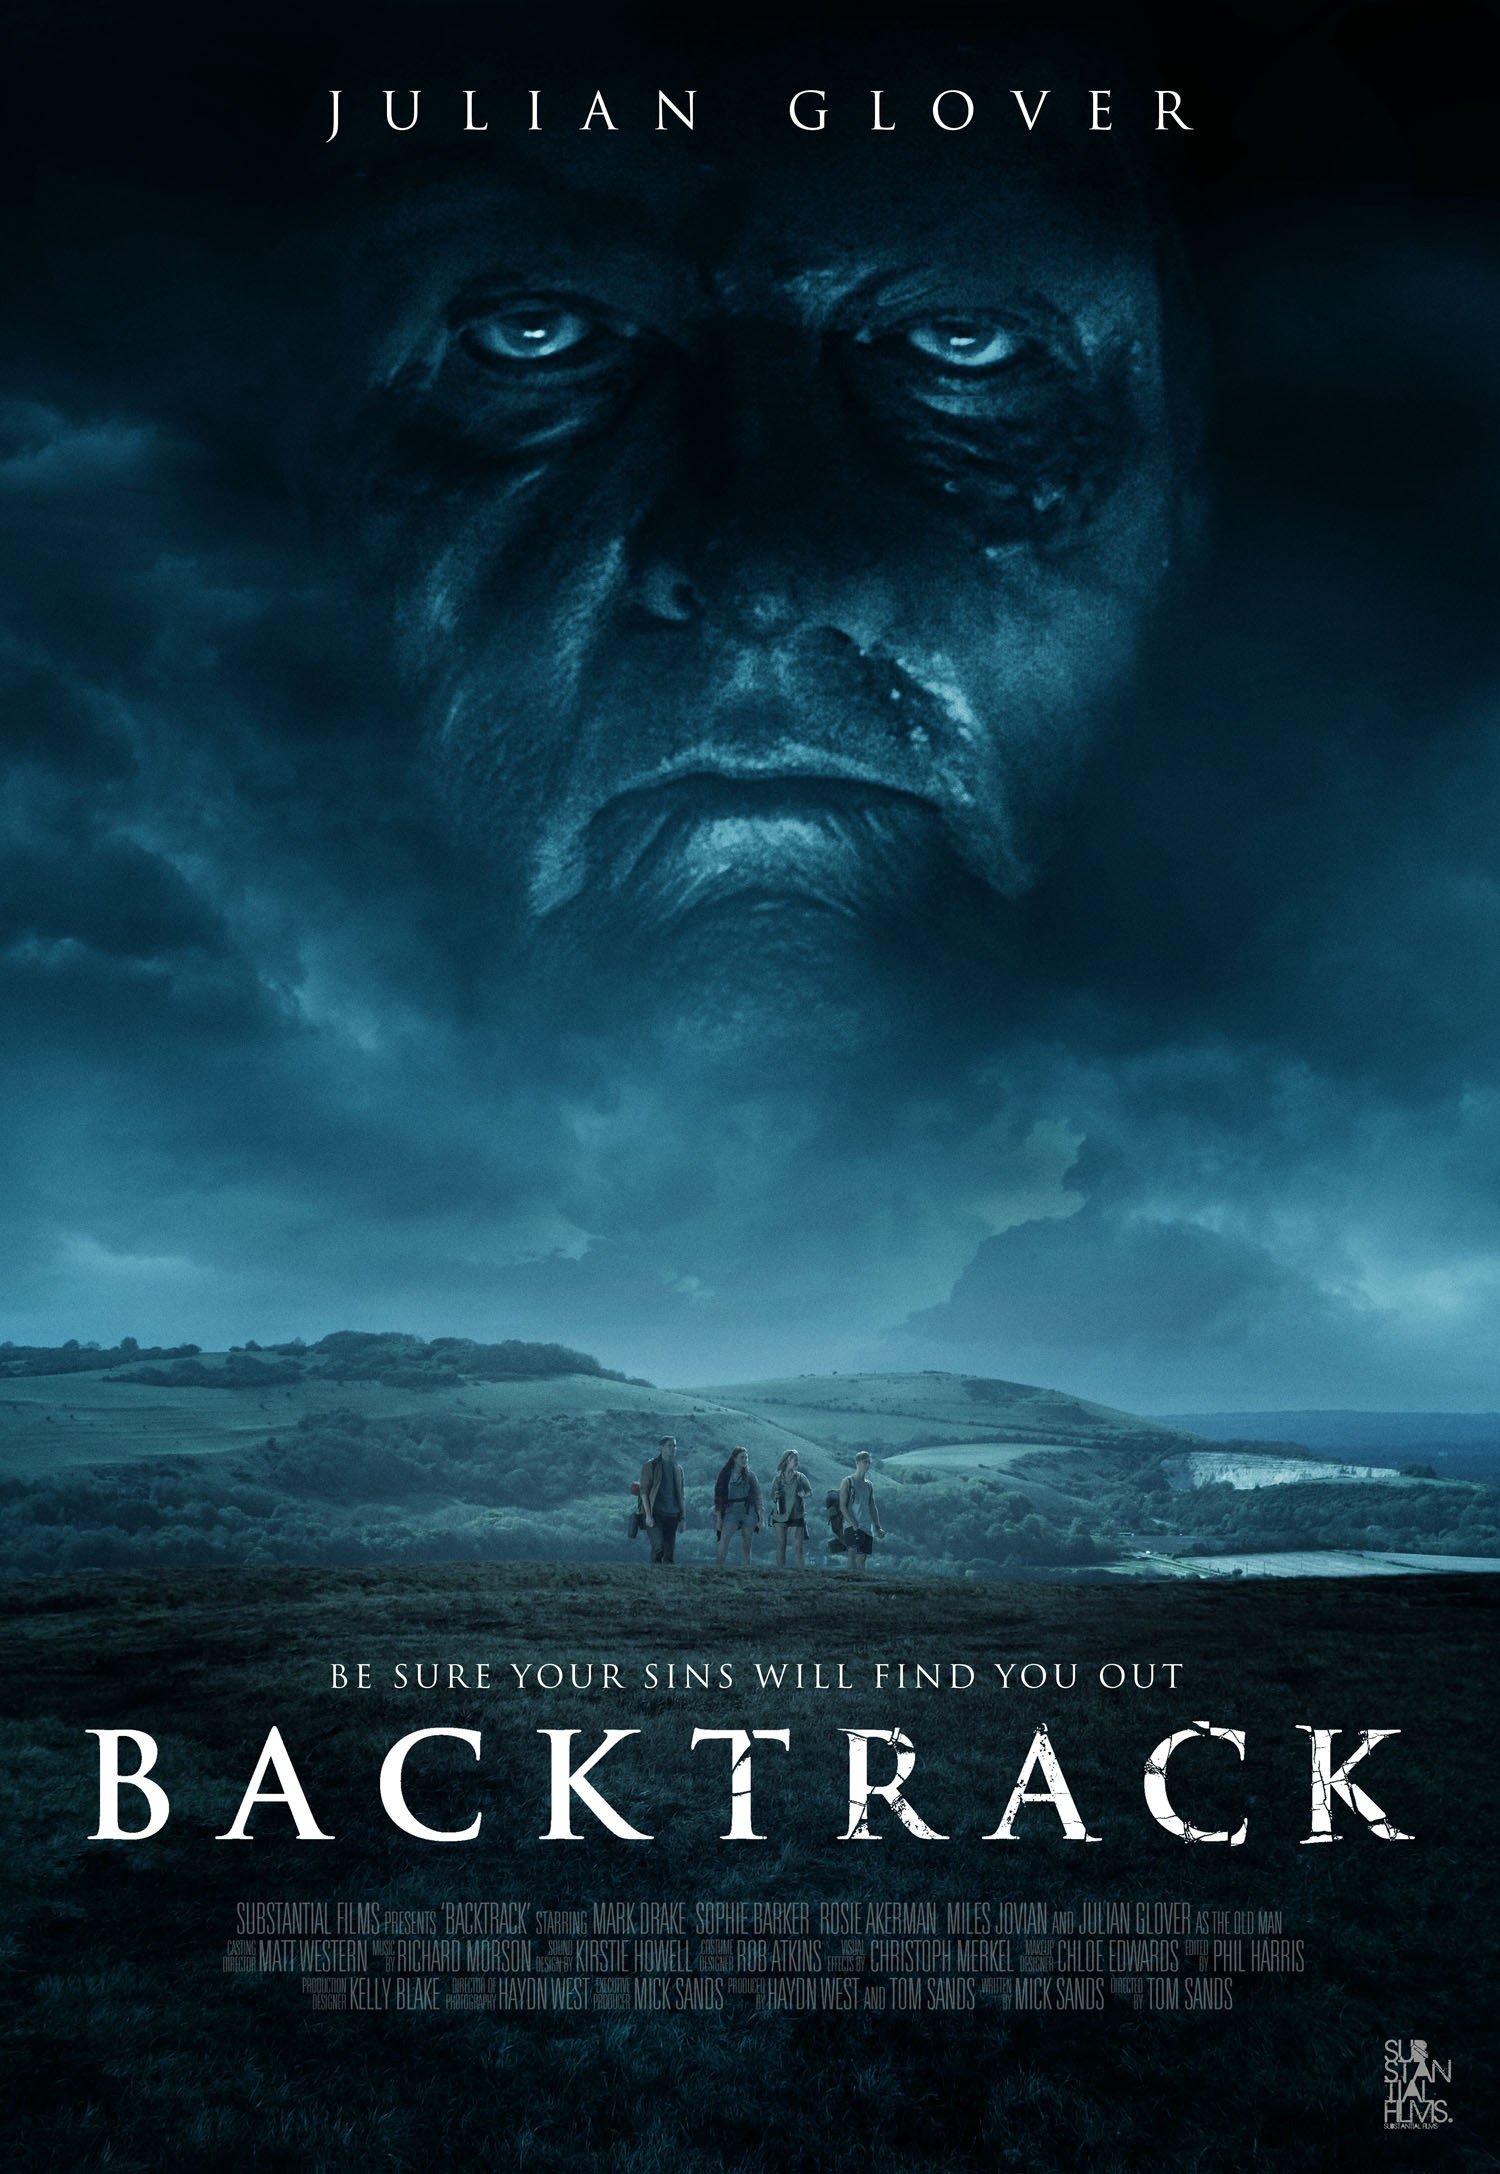 Backtrack (2015)dvdplanetstorepk